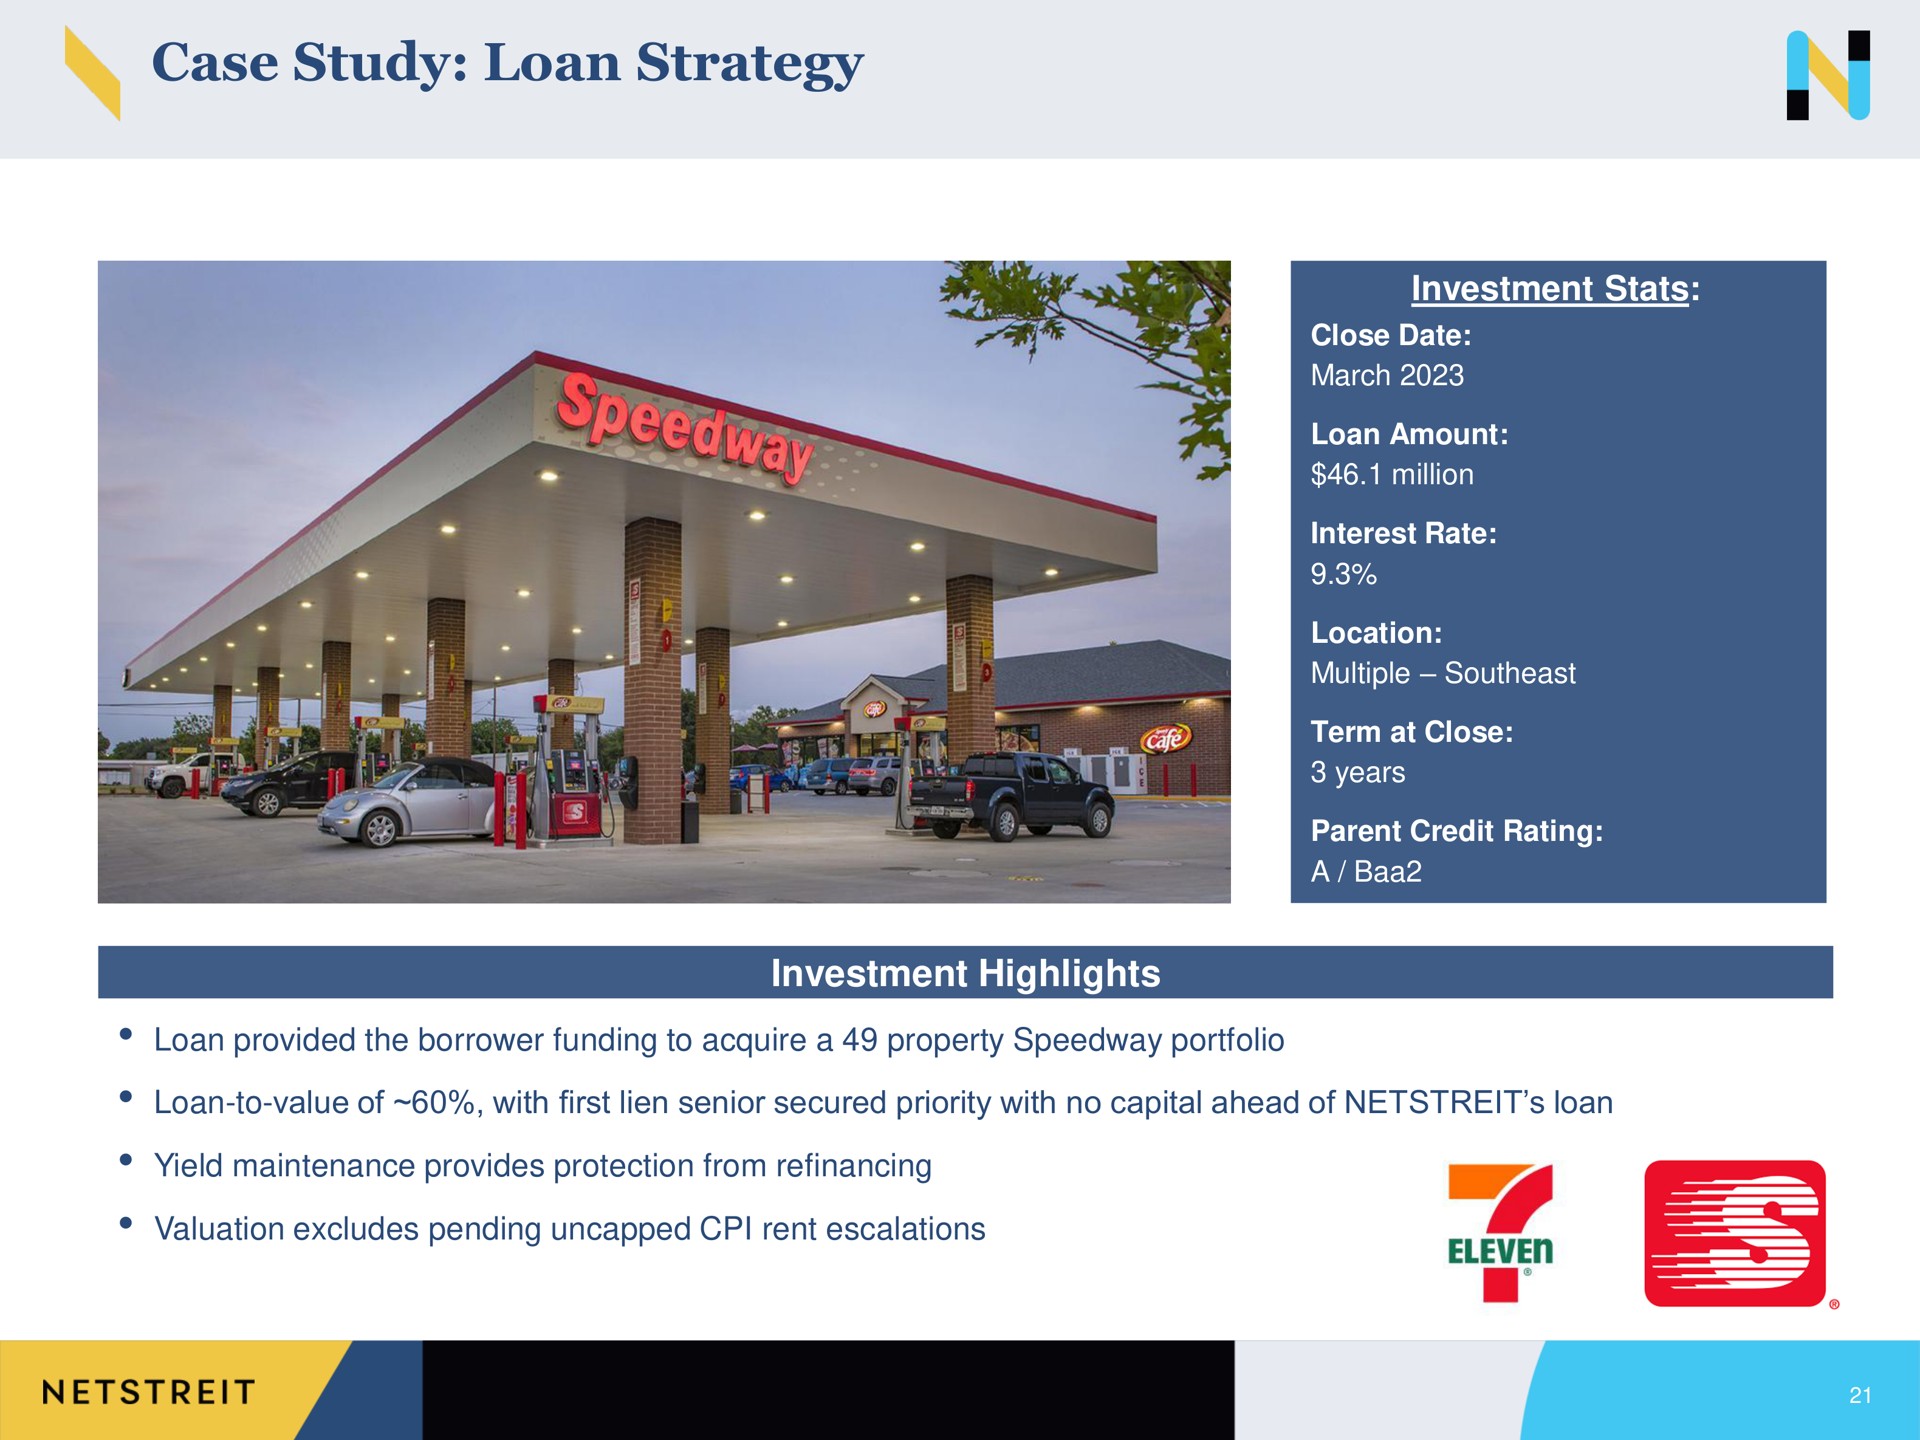 case study loan strategy investment highlights | Netstreit